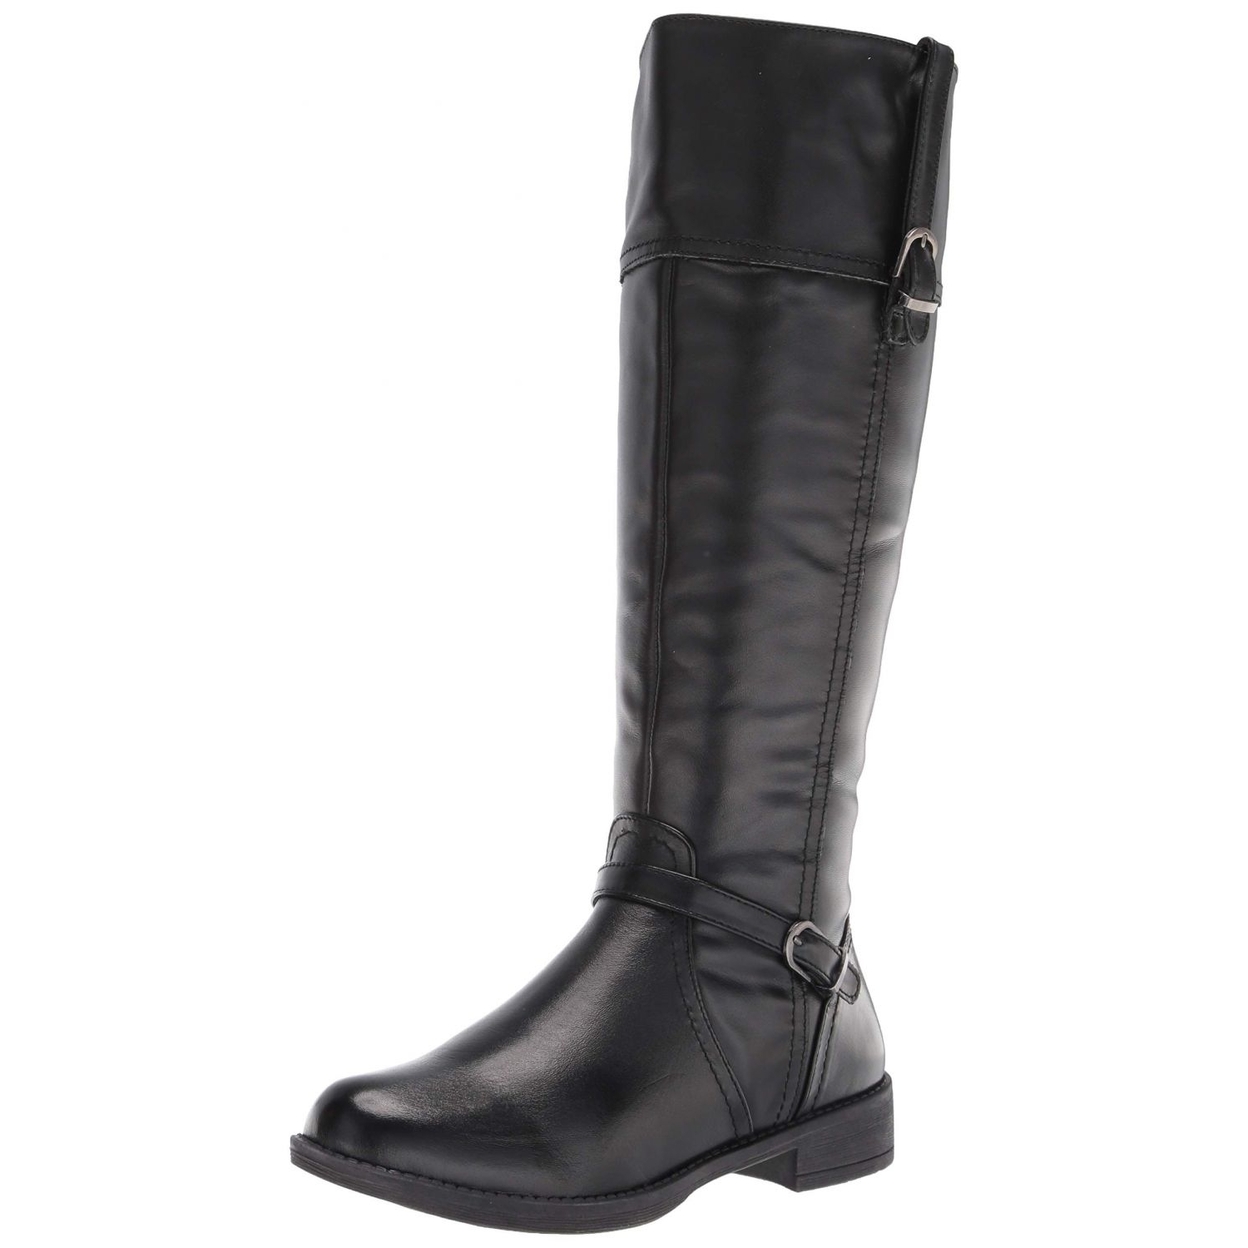 Propet Womens Tasha Zippered Casual Boots Knee High Low Heel 1-2 - Black BROWN - BROWN, 7.5 Wide